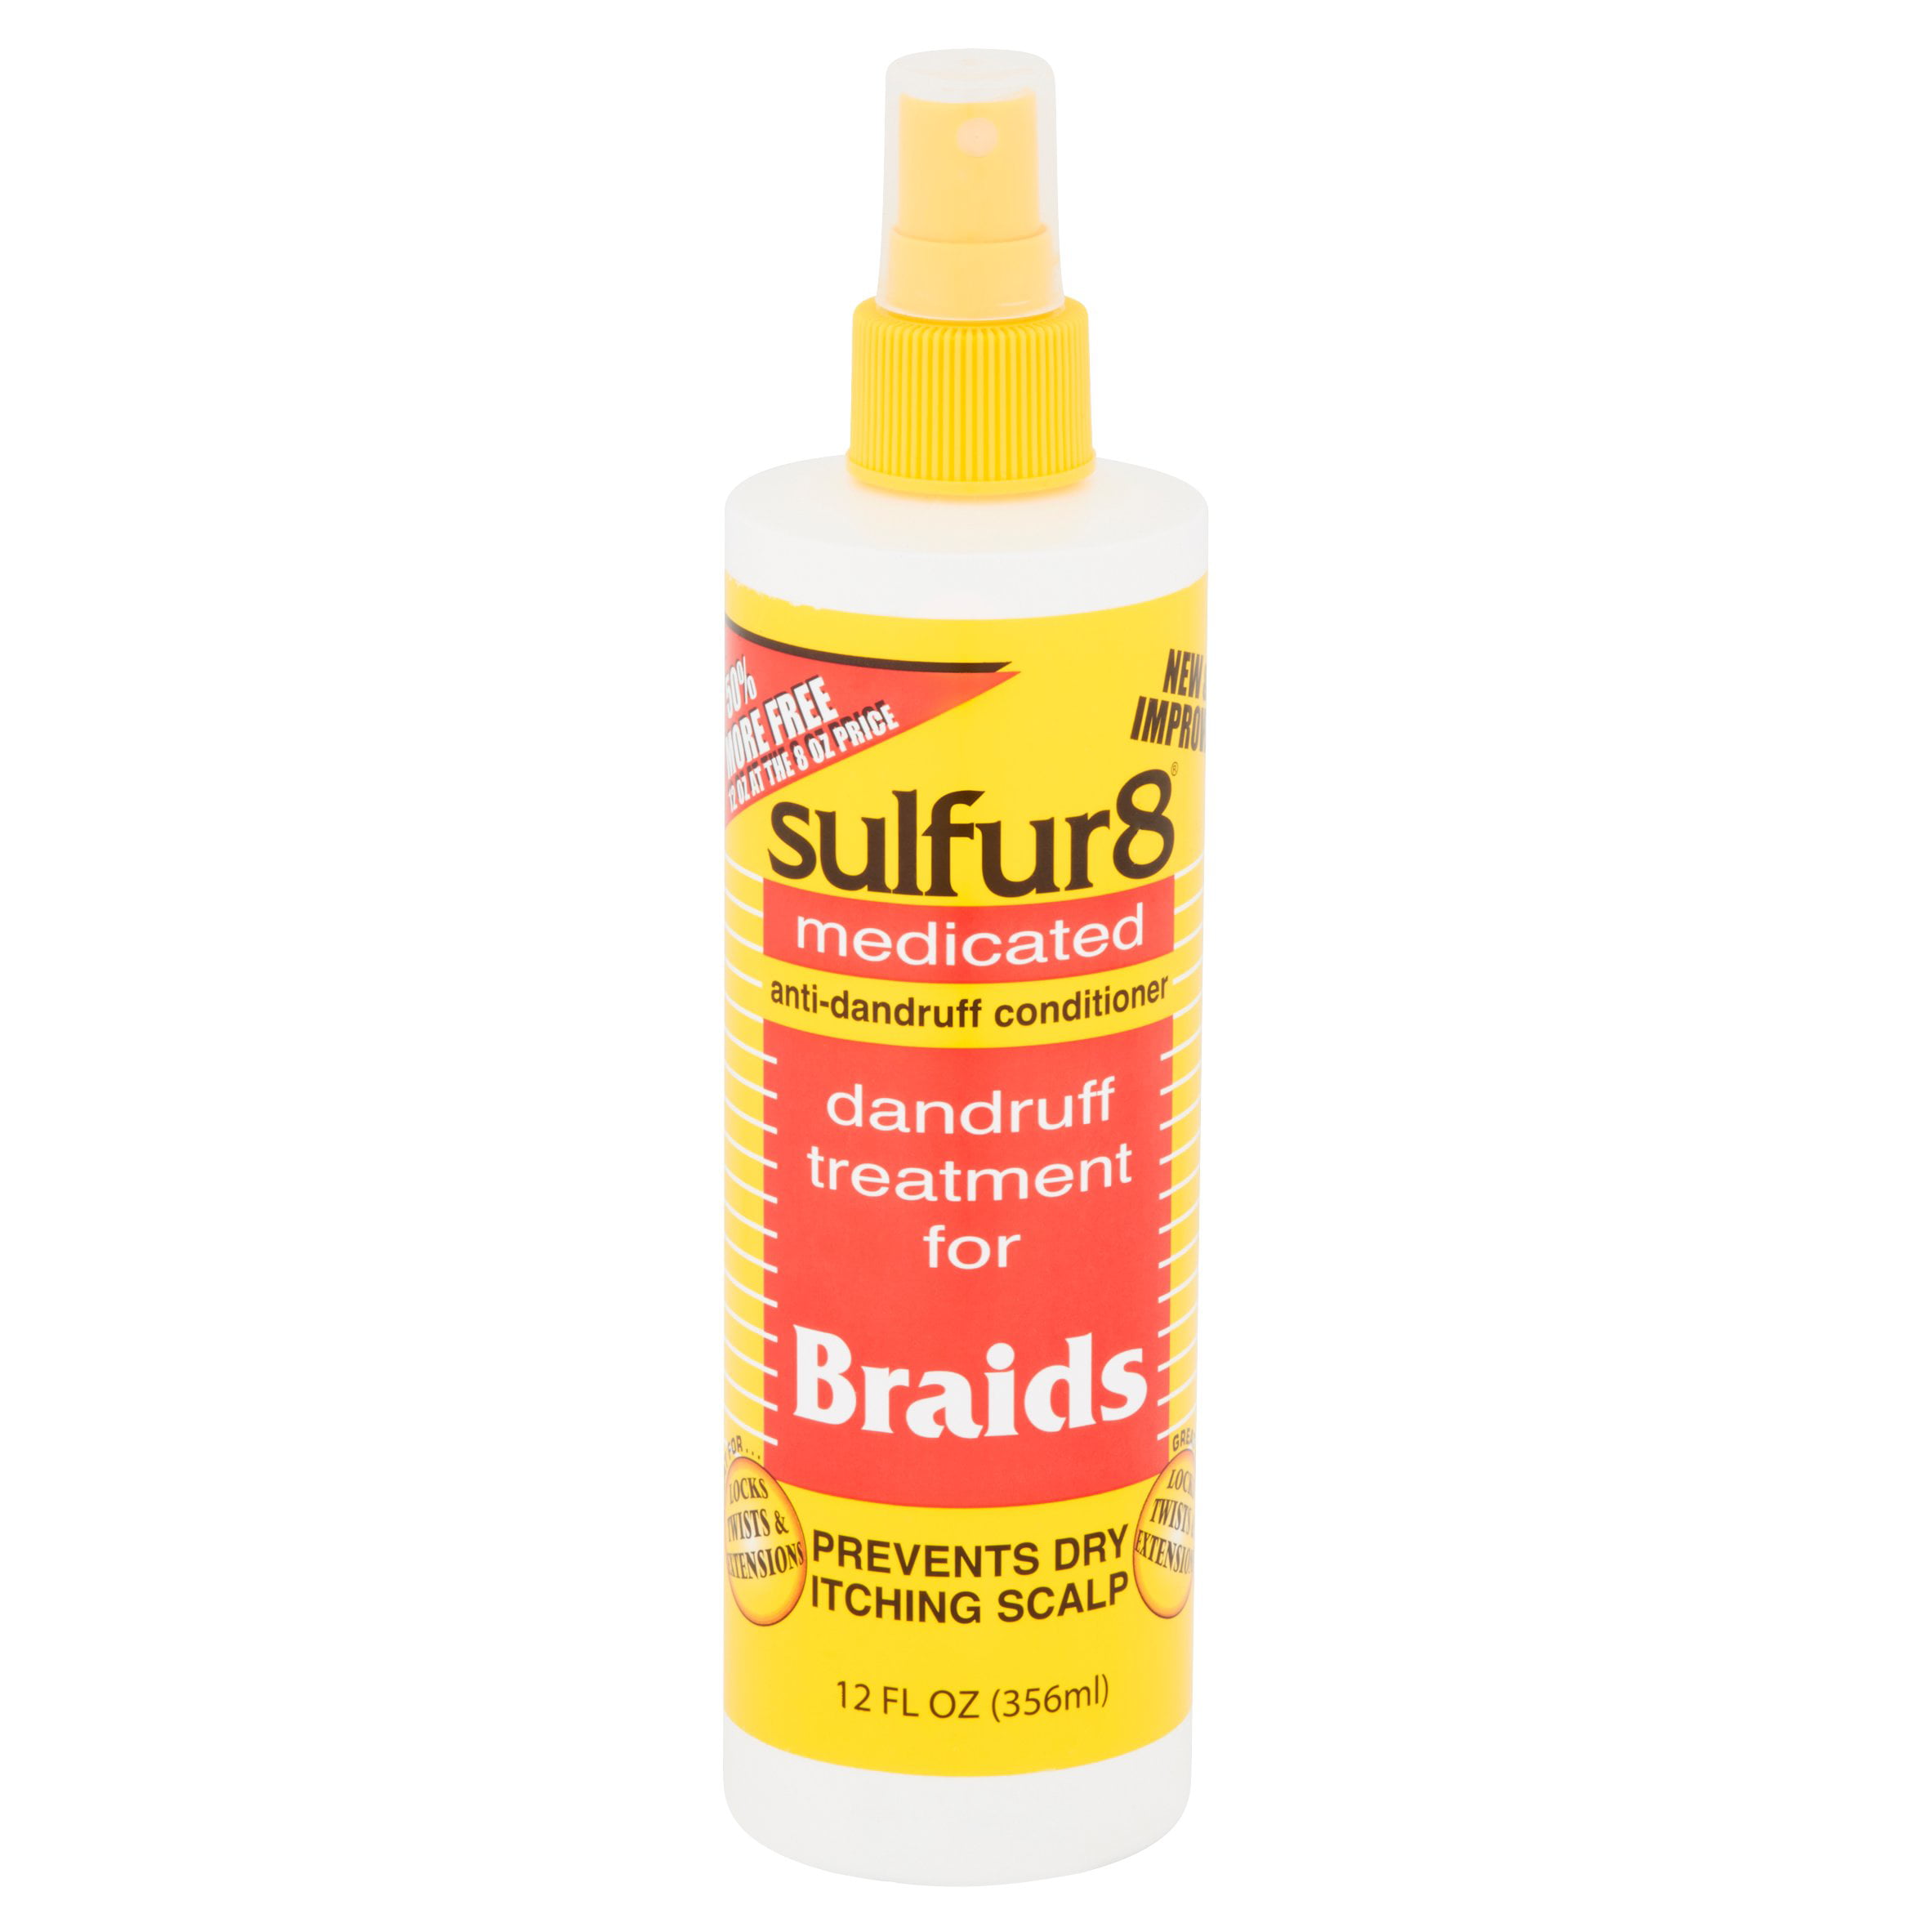 Sulfur8 Dandruff Treatment For Braids 12 Fl Oz Walmartcom